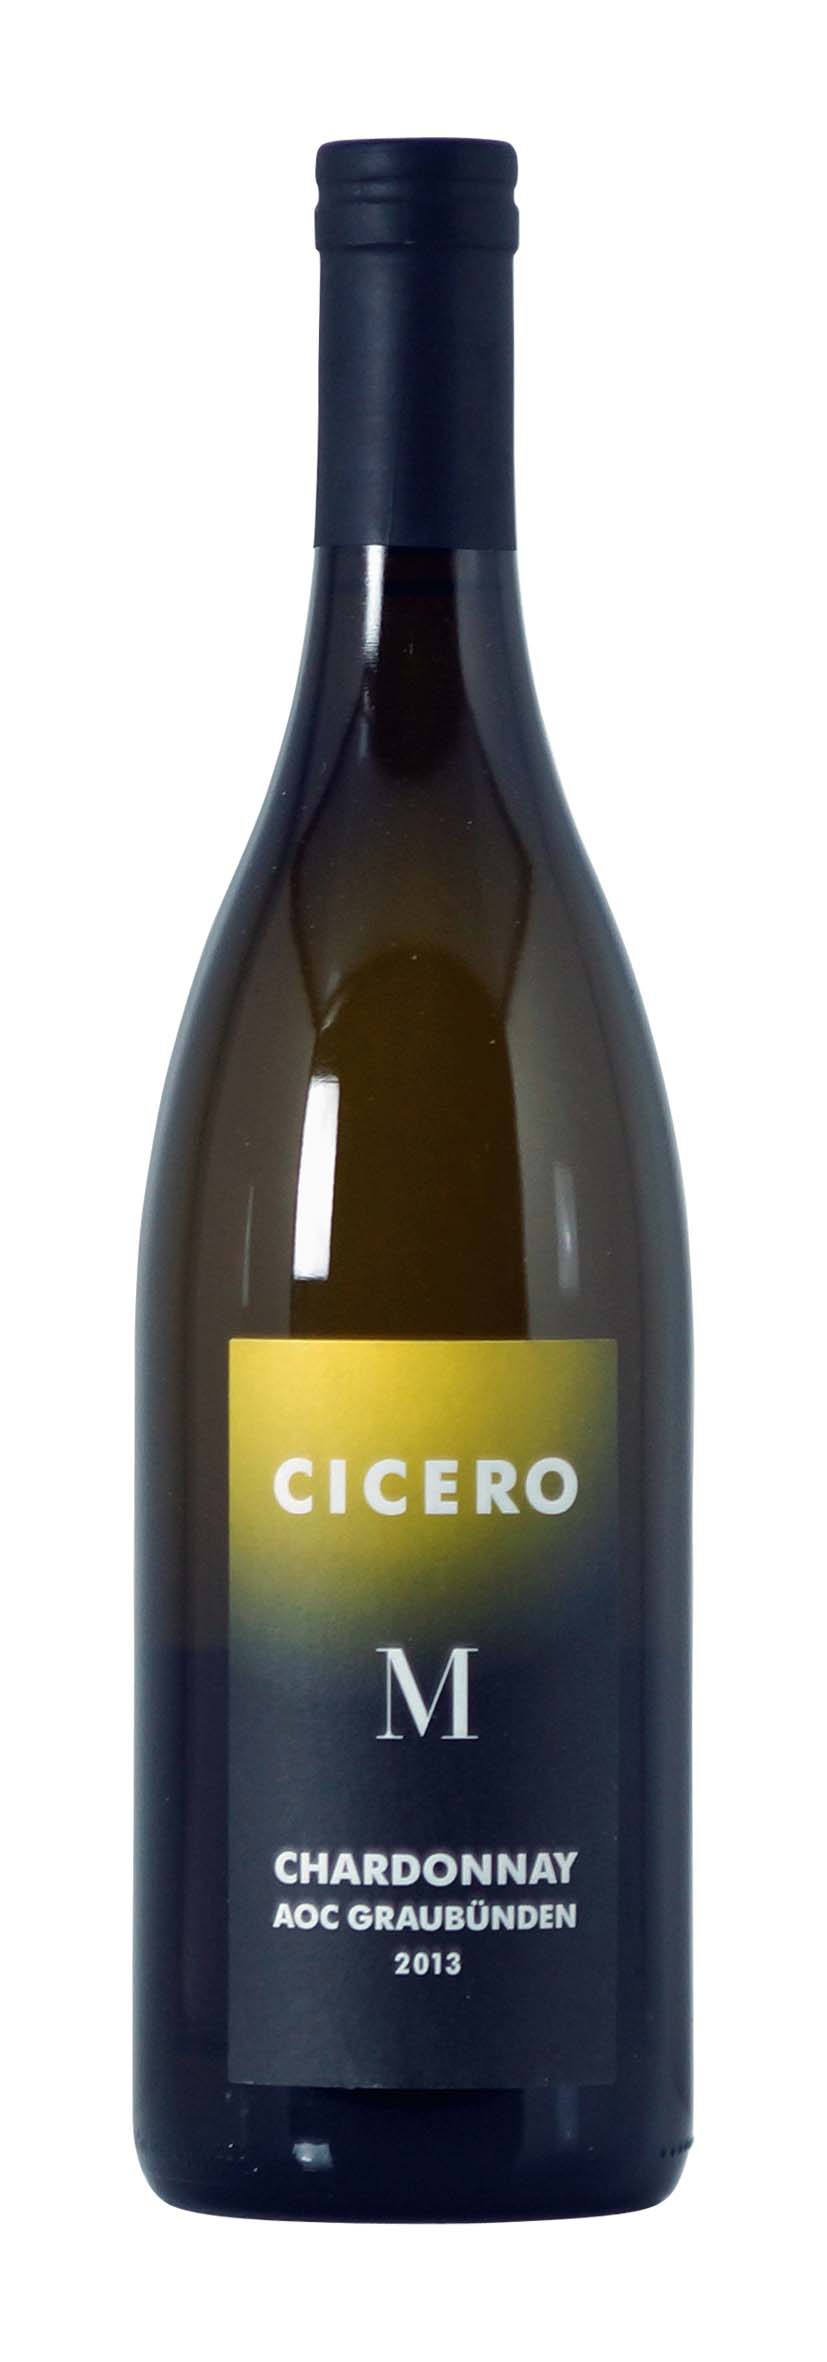 Graubünden AOC Chardonnay Cicero M 2013